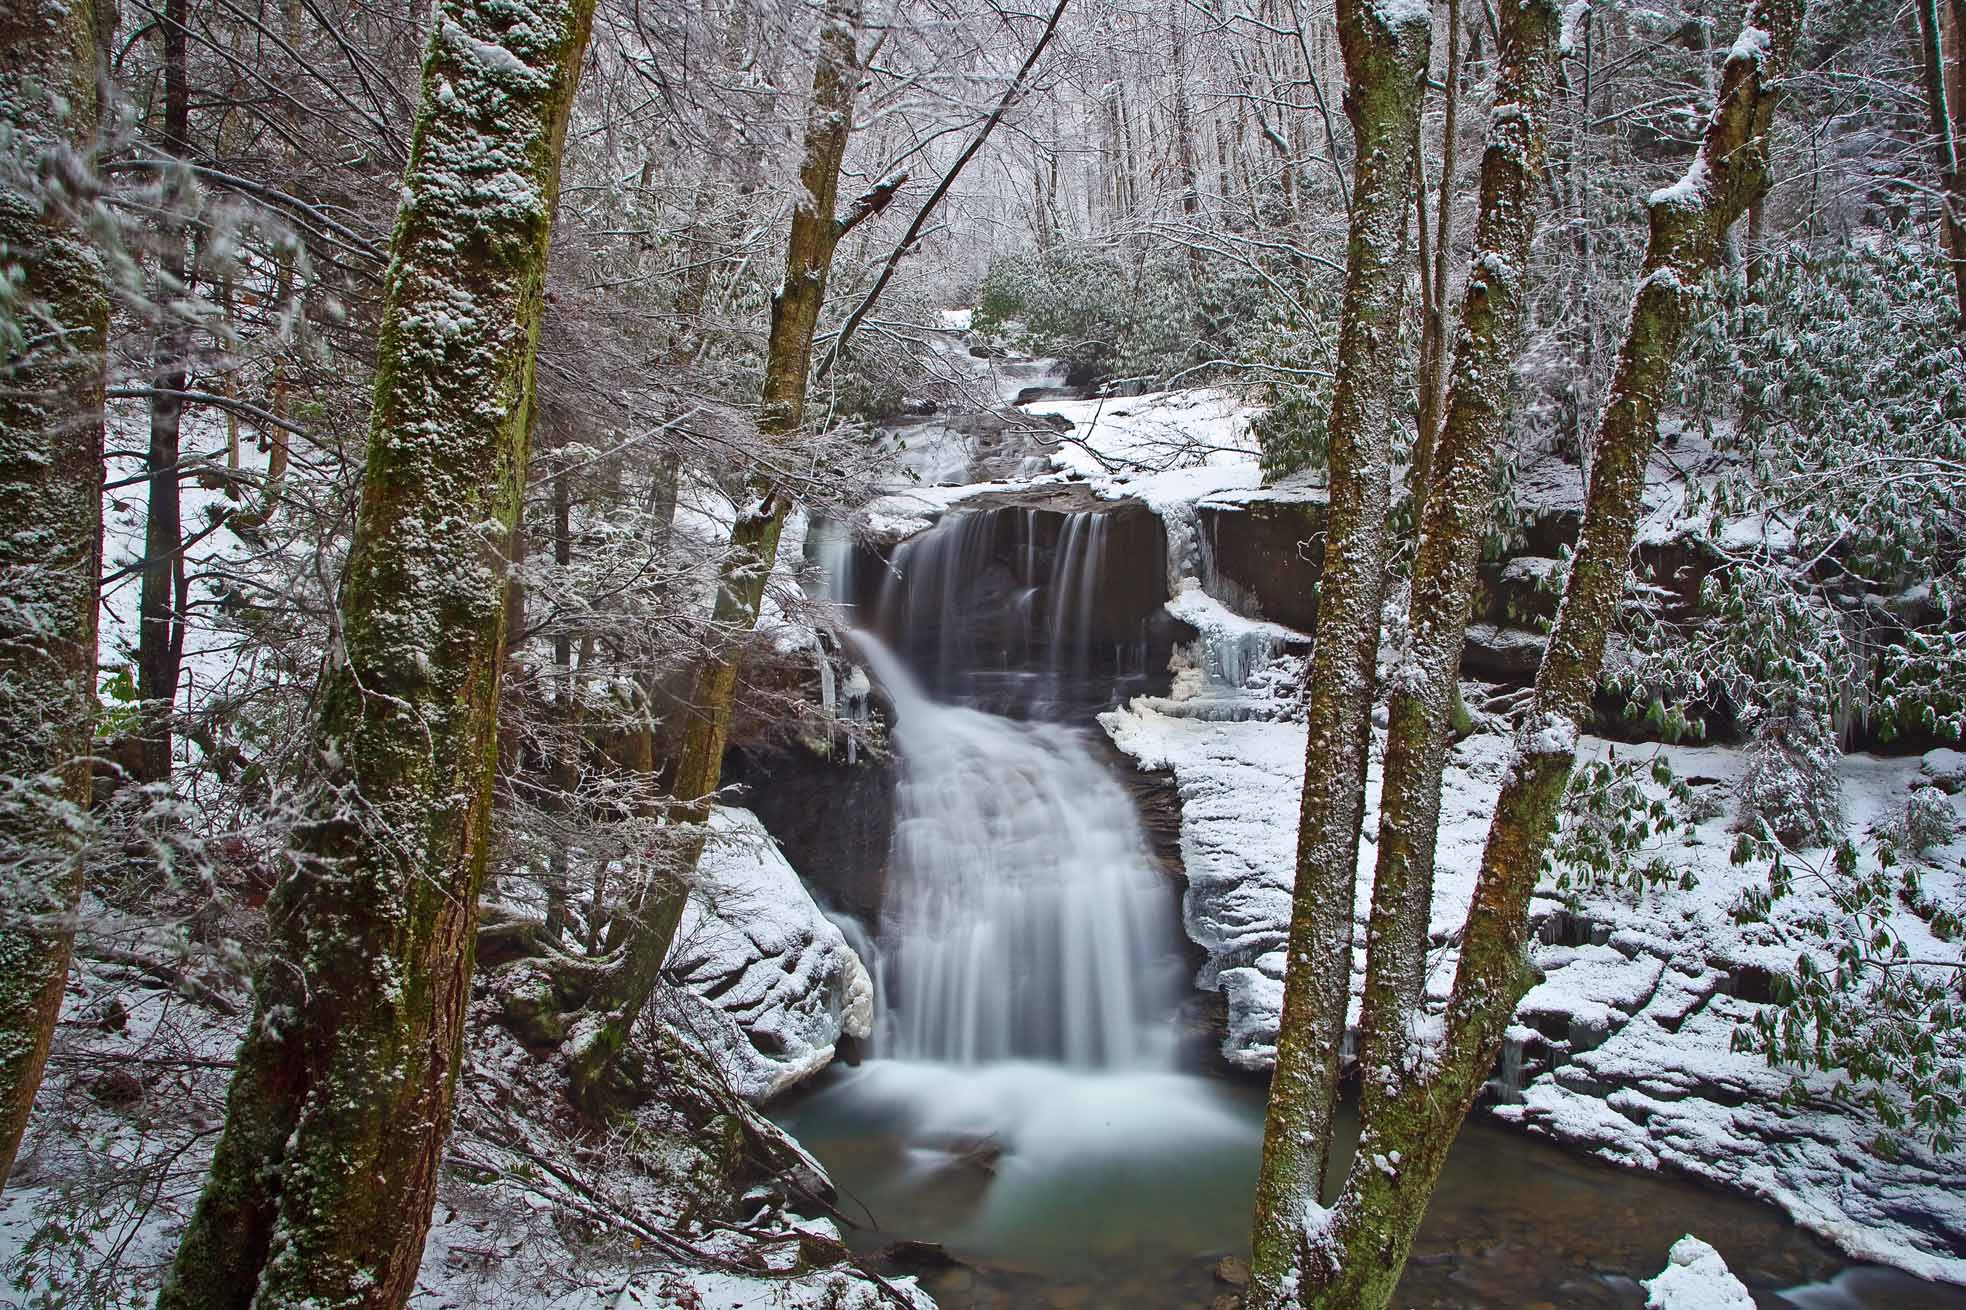 'snowy winter wv ravine waterfall' by ForestWander